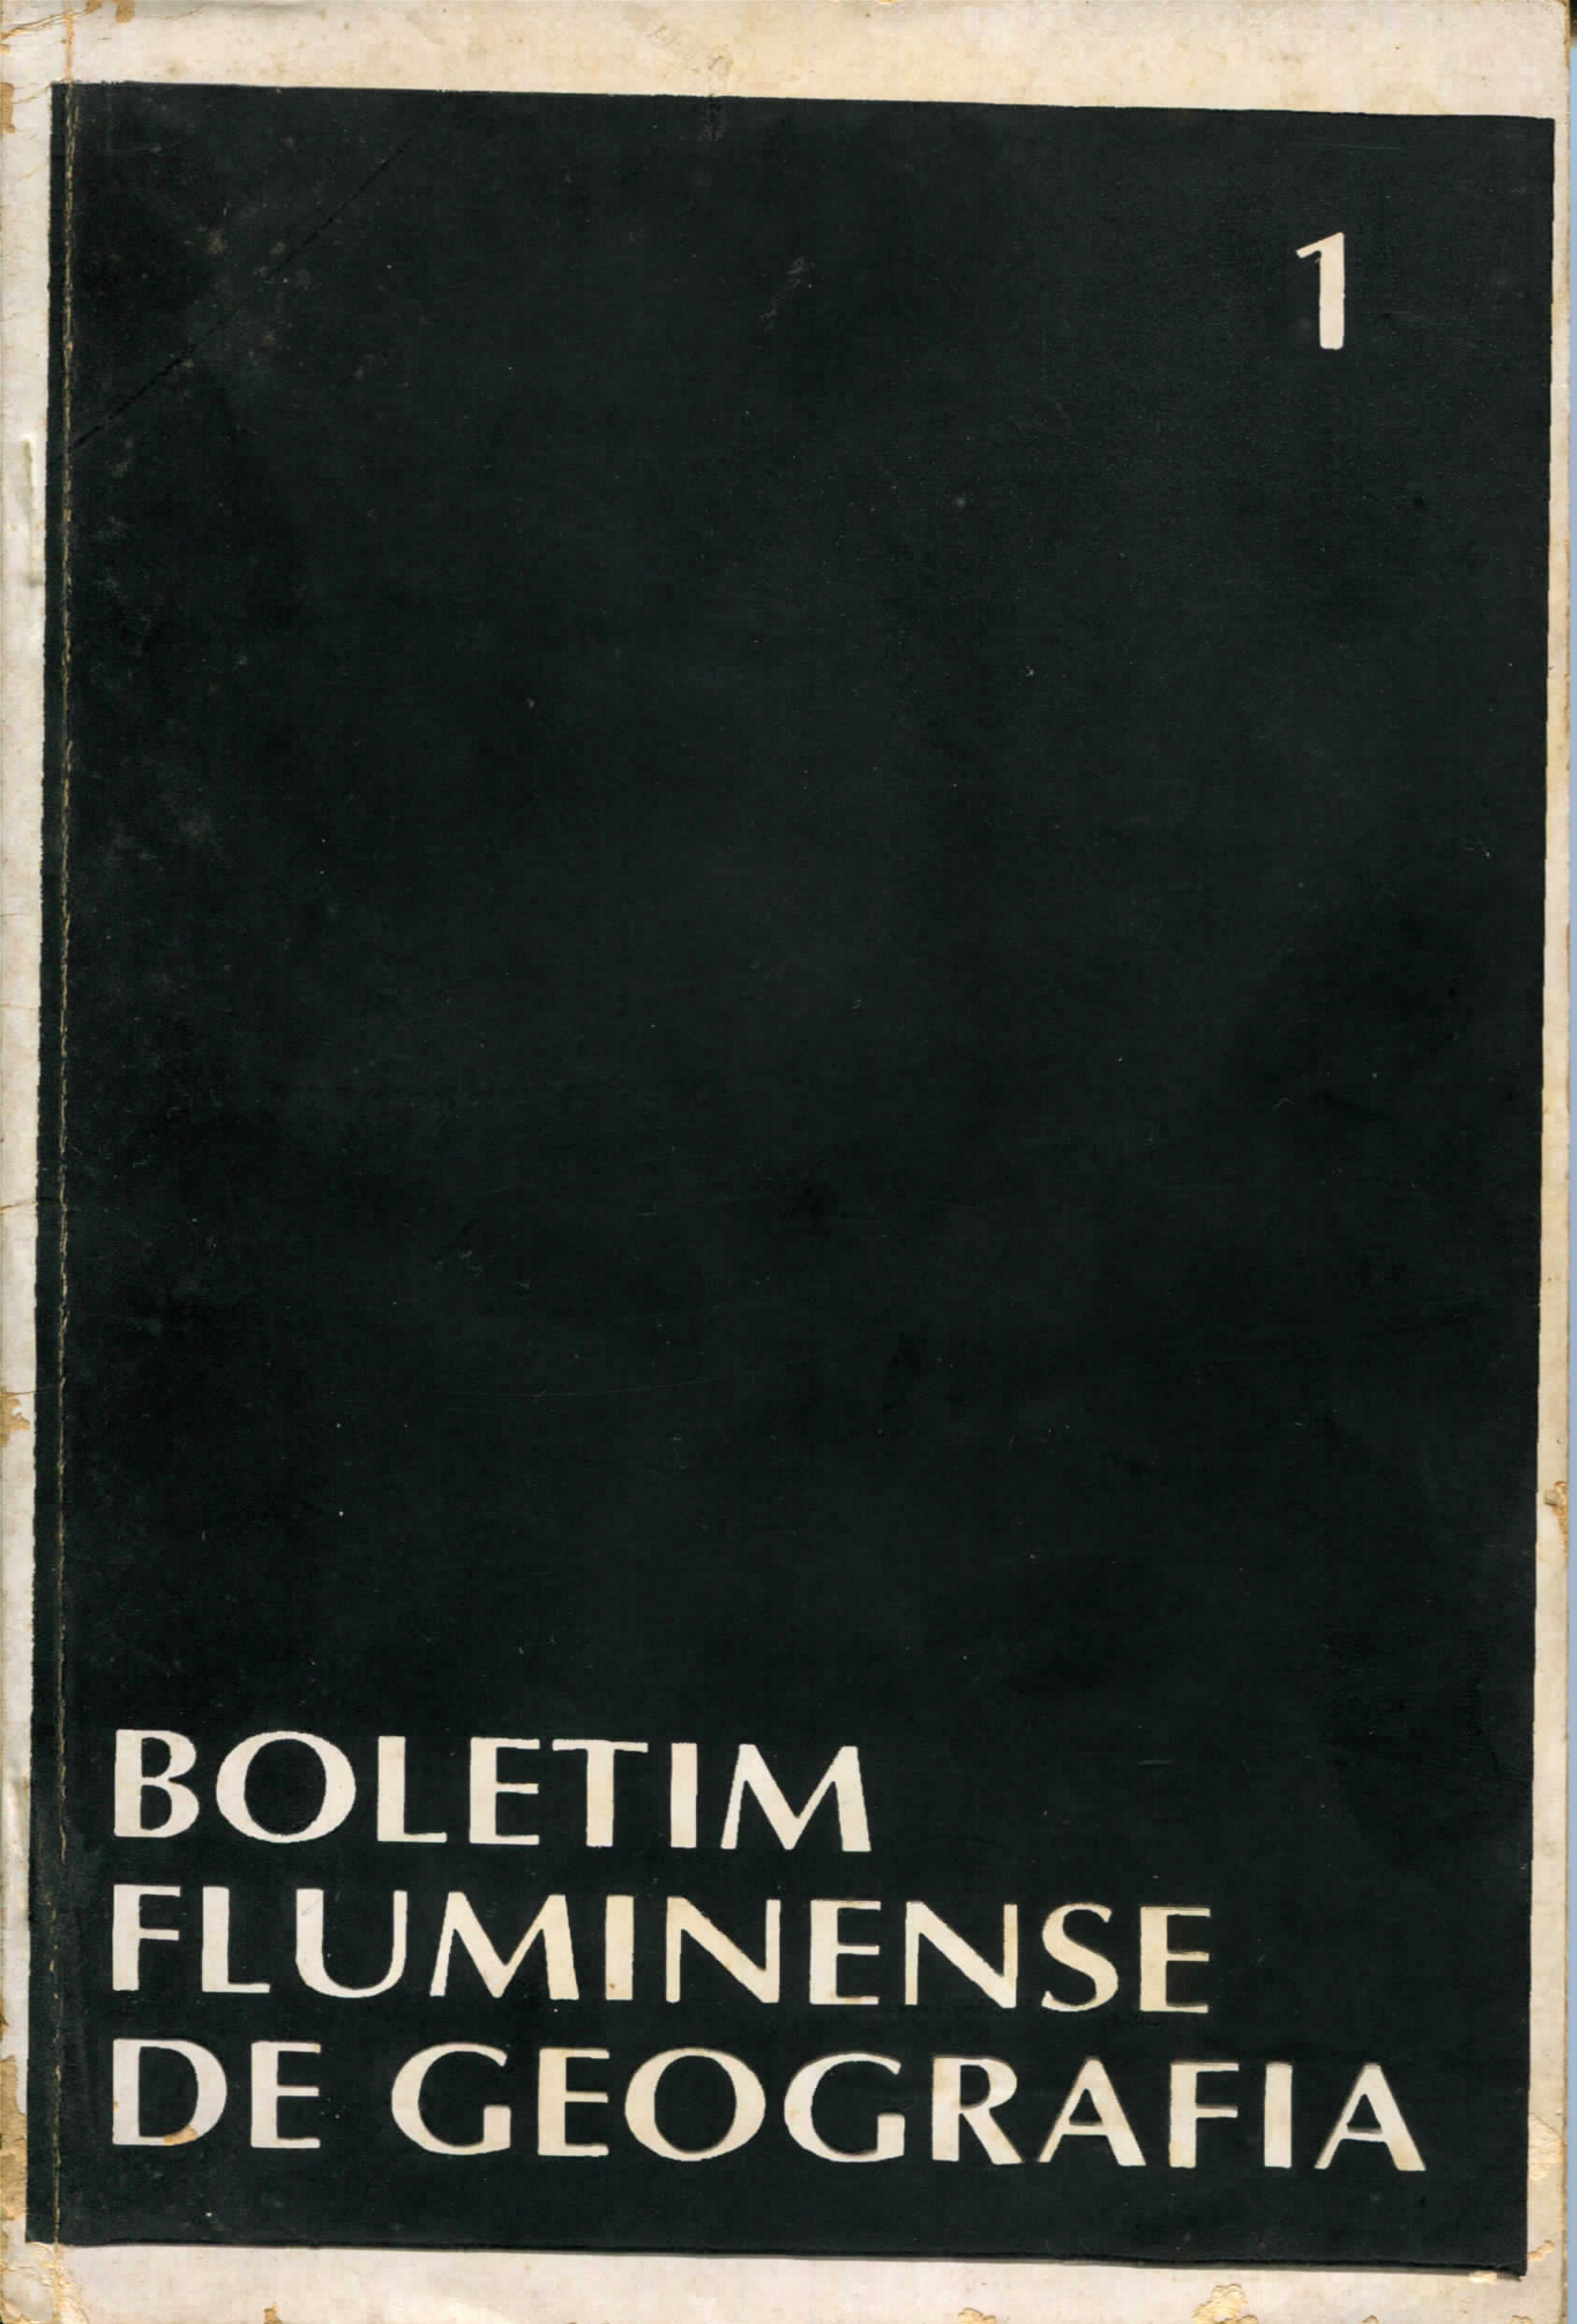 					View Vol. 1 No. 1 (1993): BOLETIM FLUMINENSE DE GEOGRAFIA
				